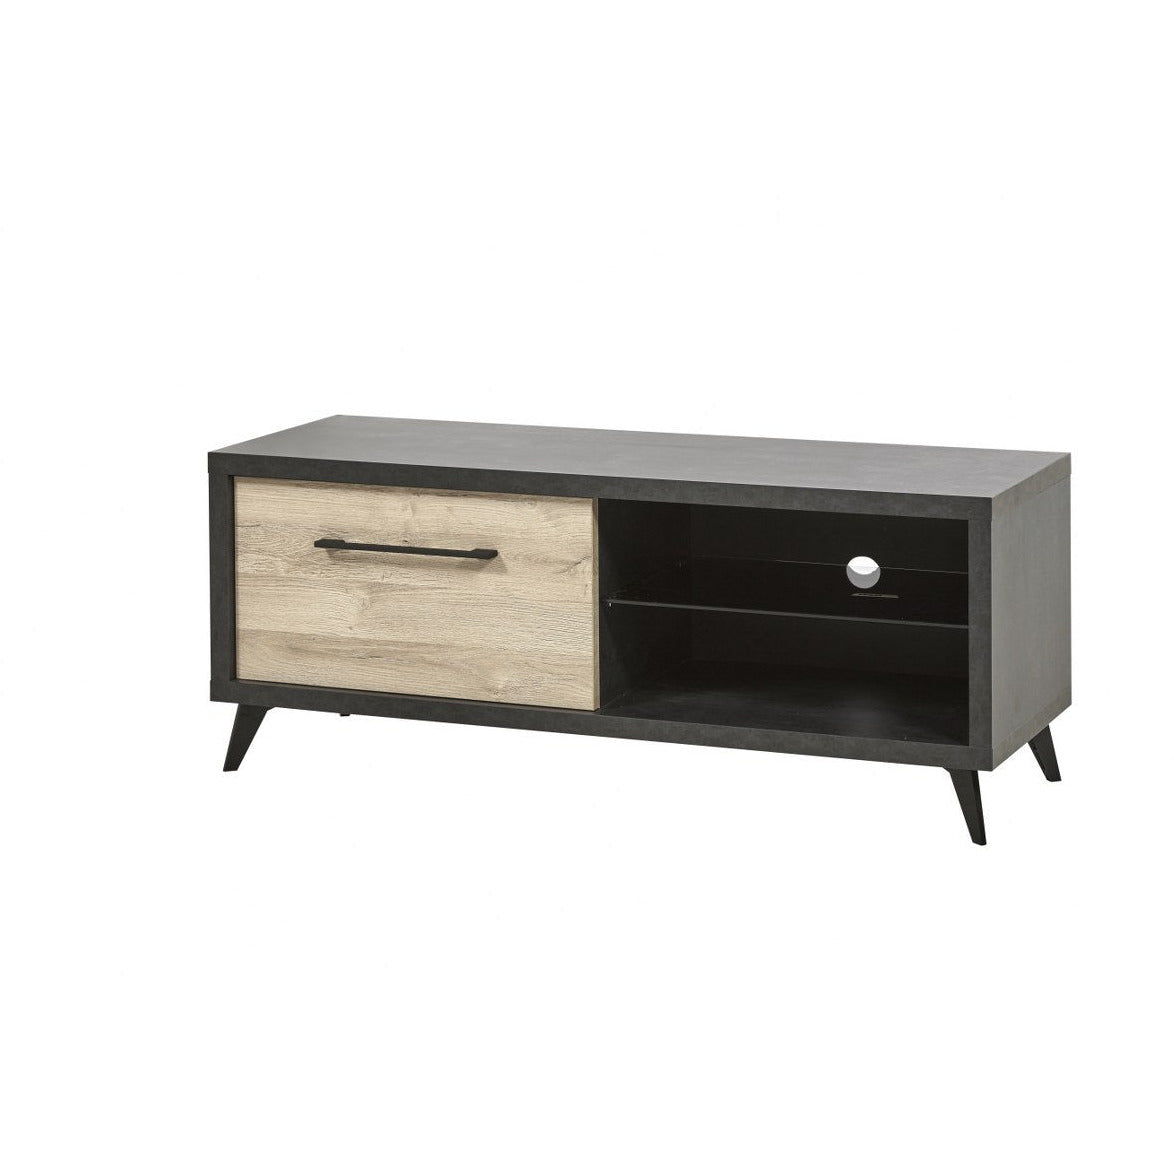 TV cabinet | Furniture series Moulin | Natural, black | 128x54x